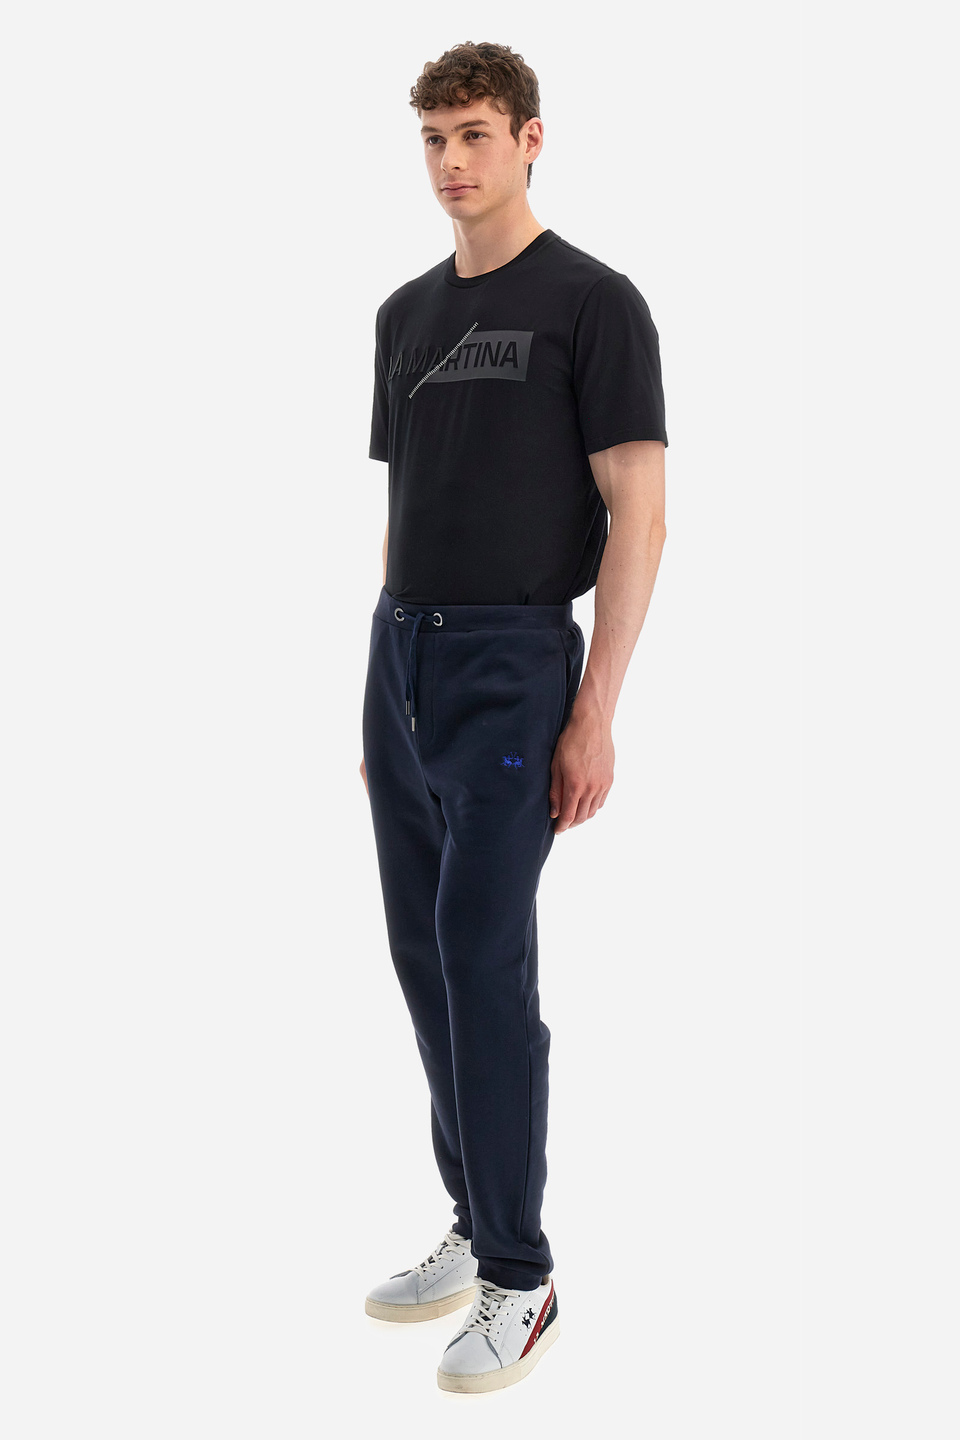 Men's jogging trousers in a regular fit - Welton | La Martina - Official Online Shop